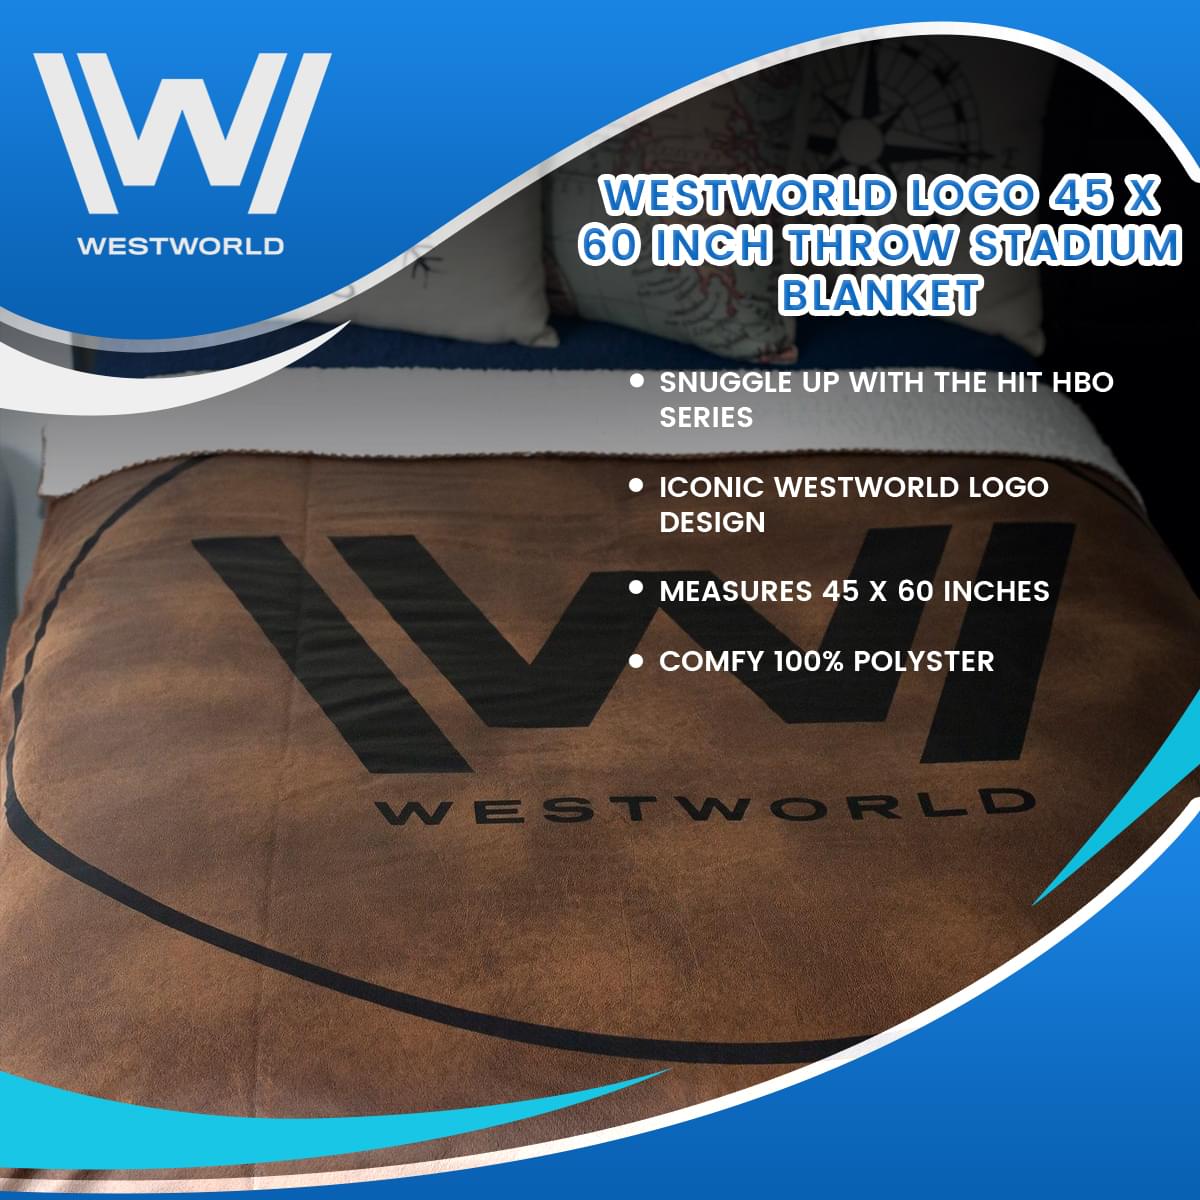 Westworld Logo 45 x 60 Inch Throw Stadium Blanket